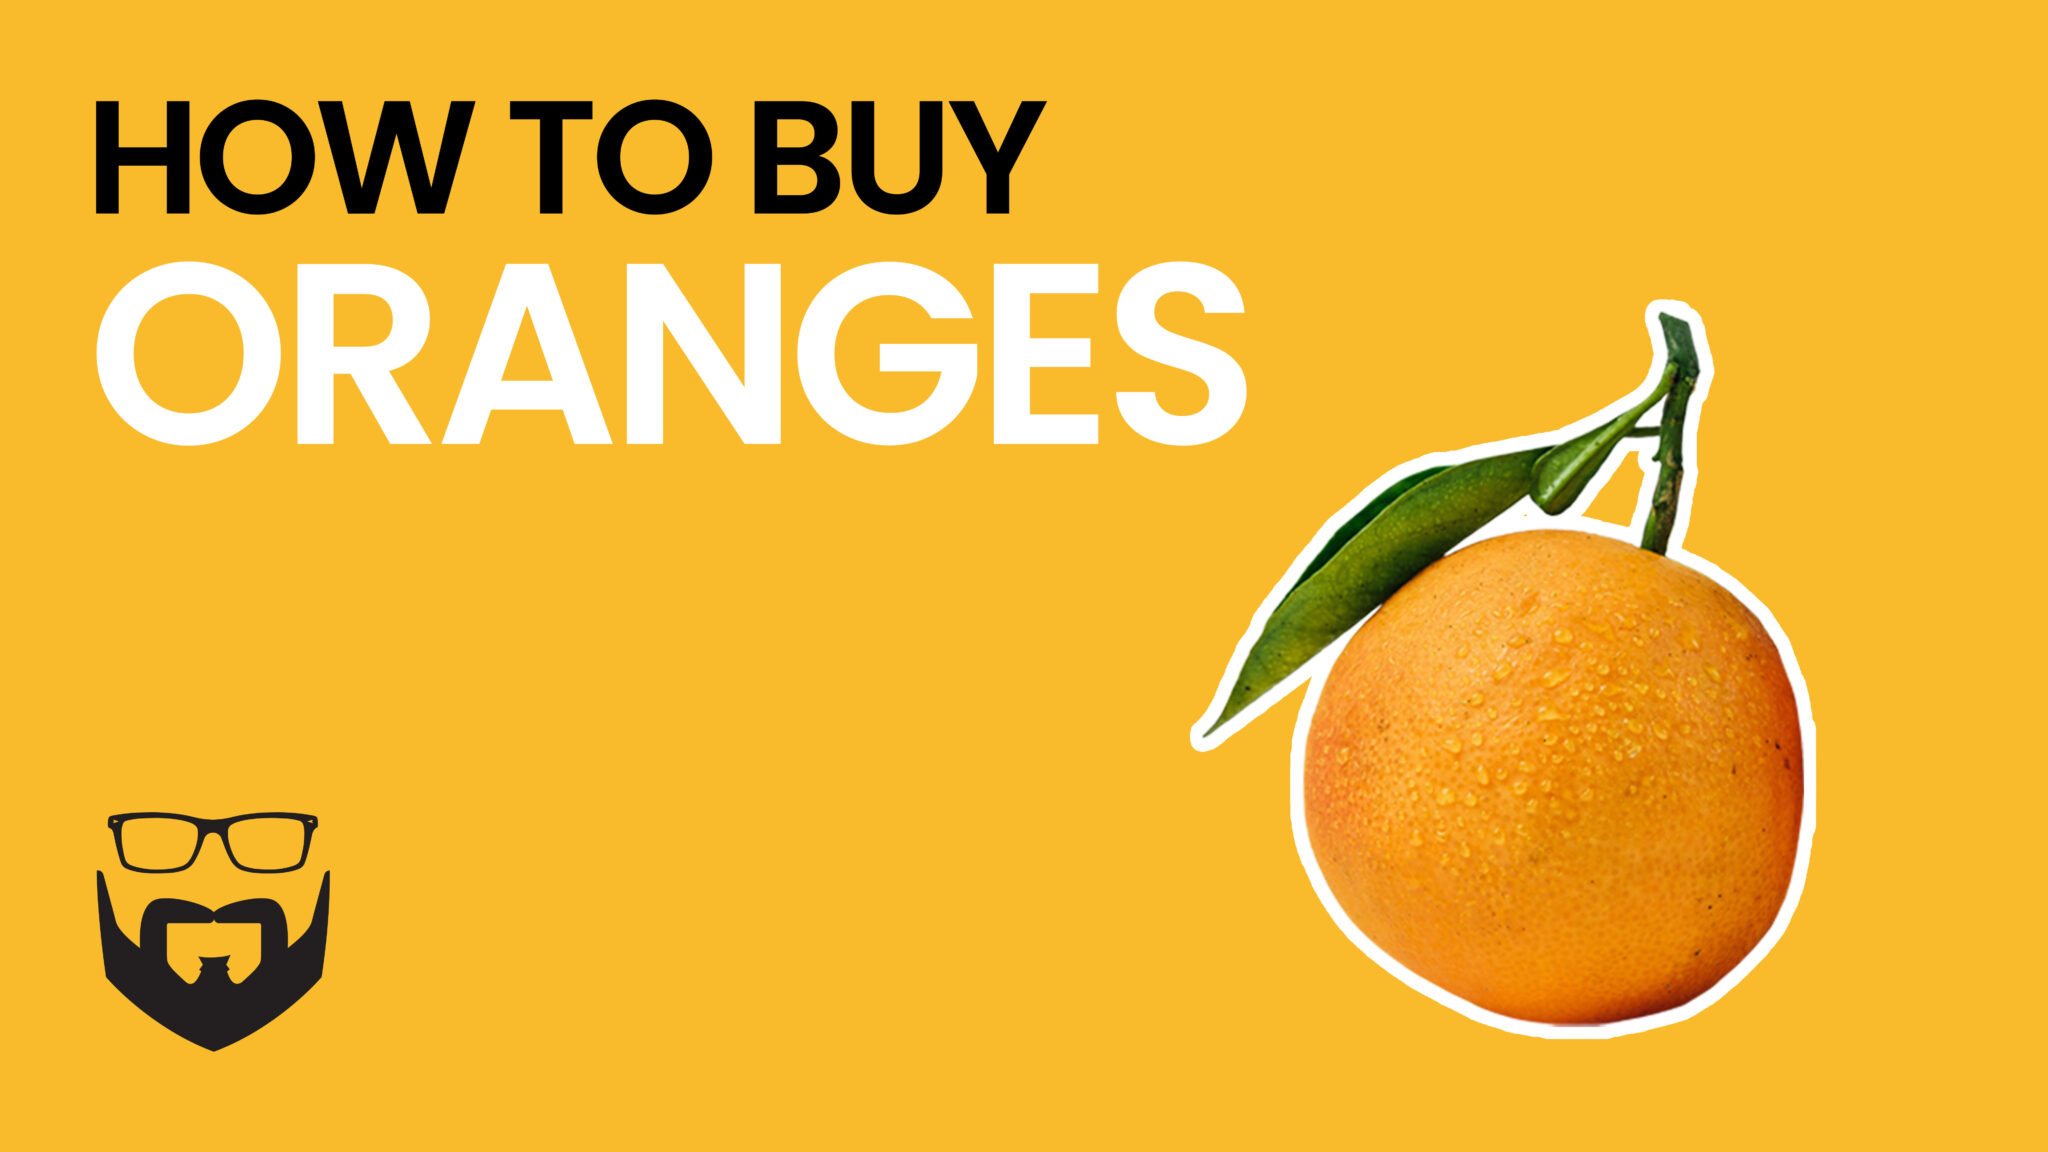 How to Buy Oranges Video - Yellow